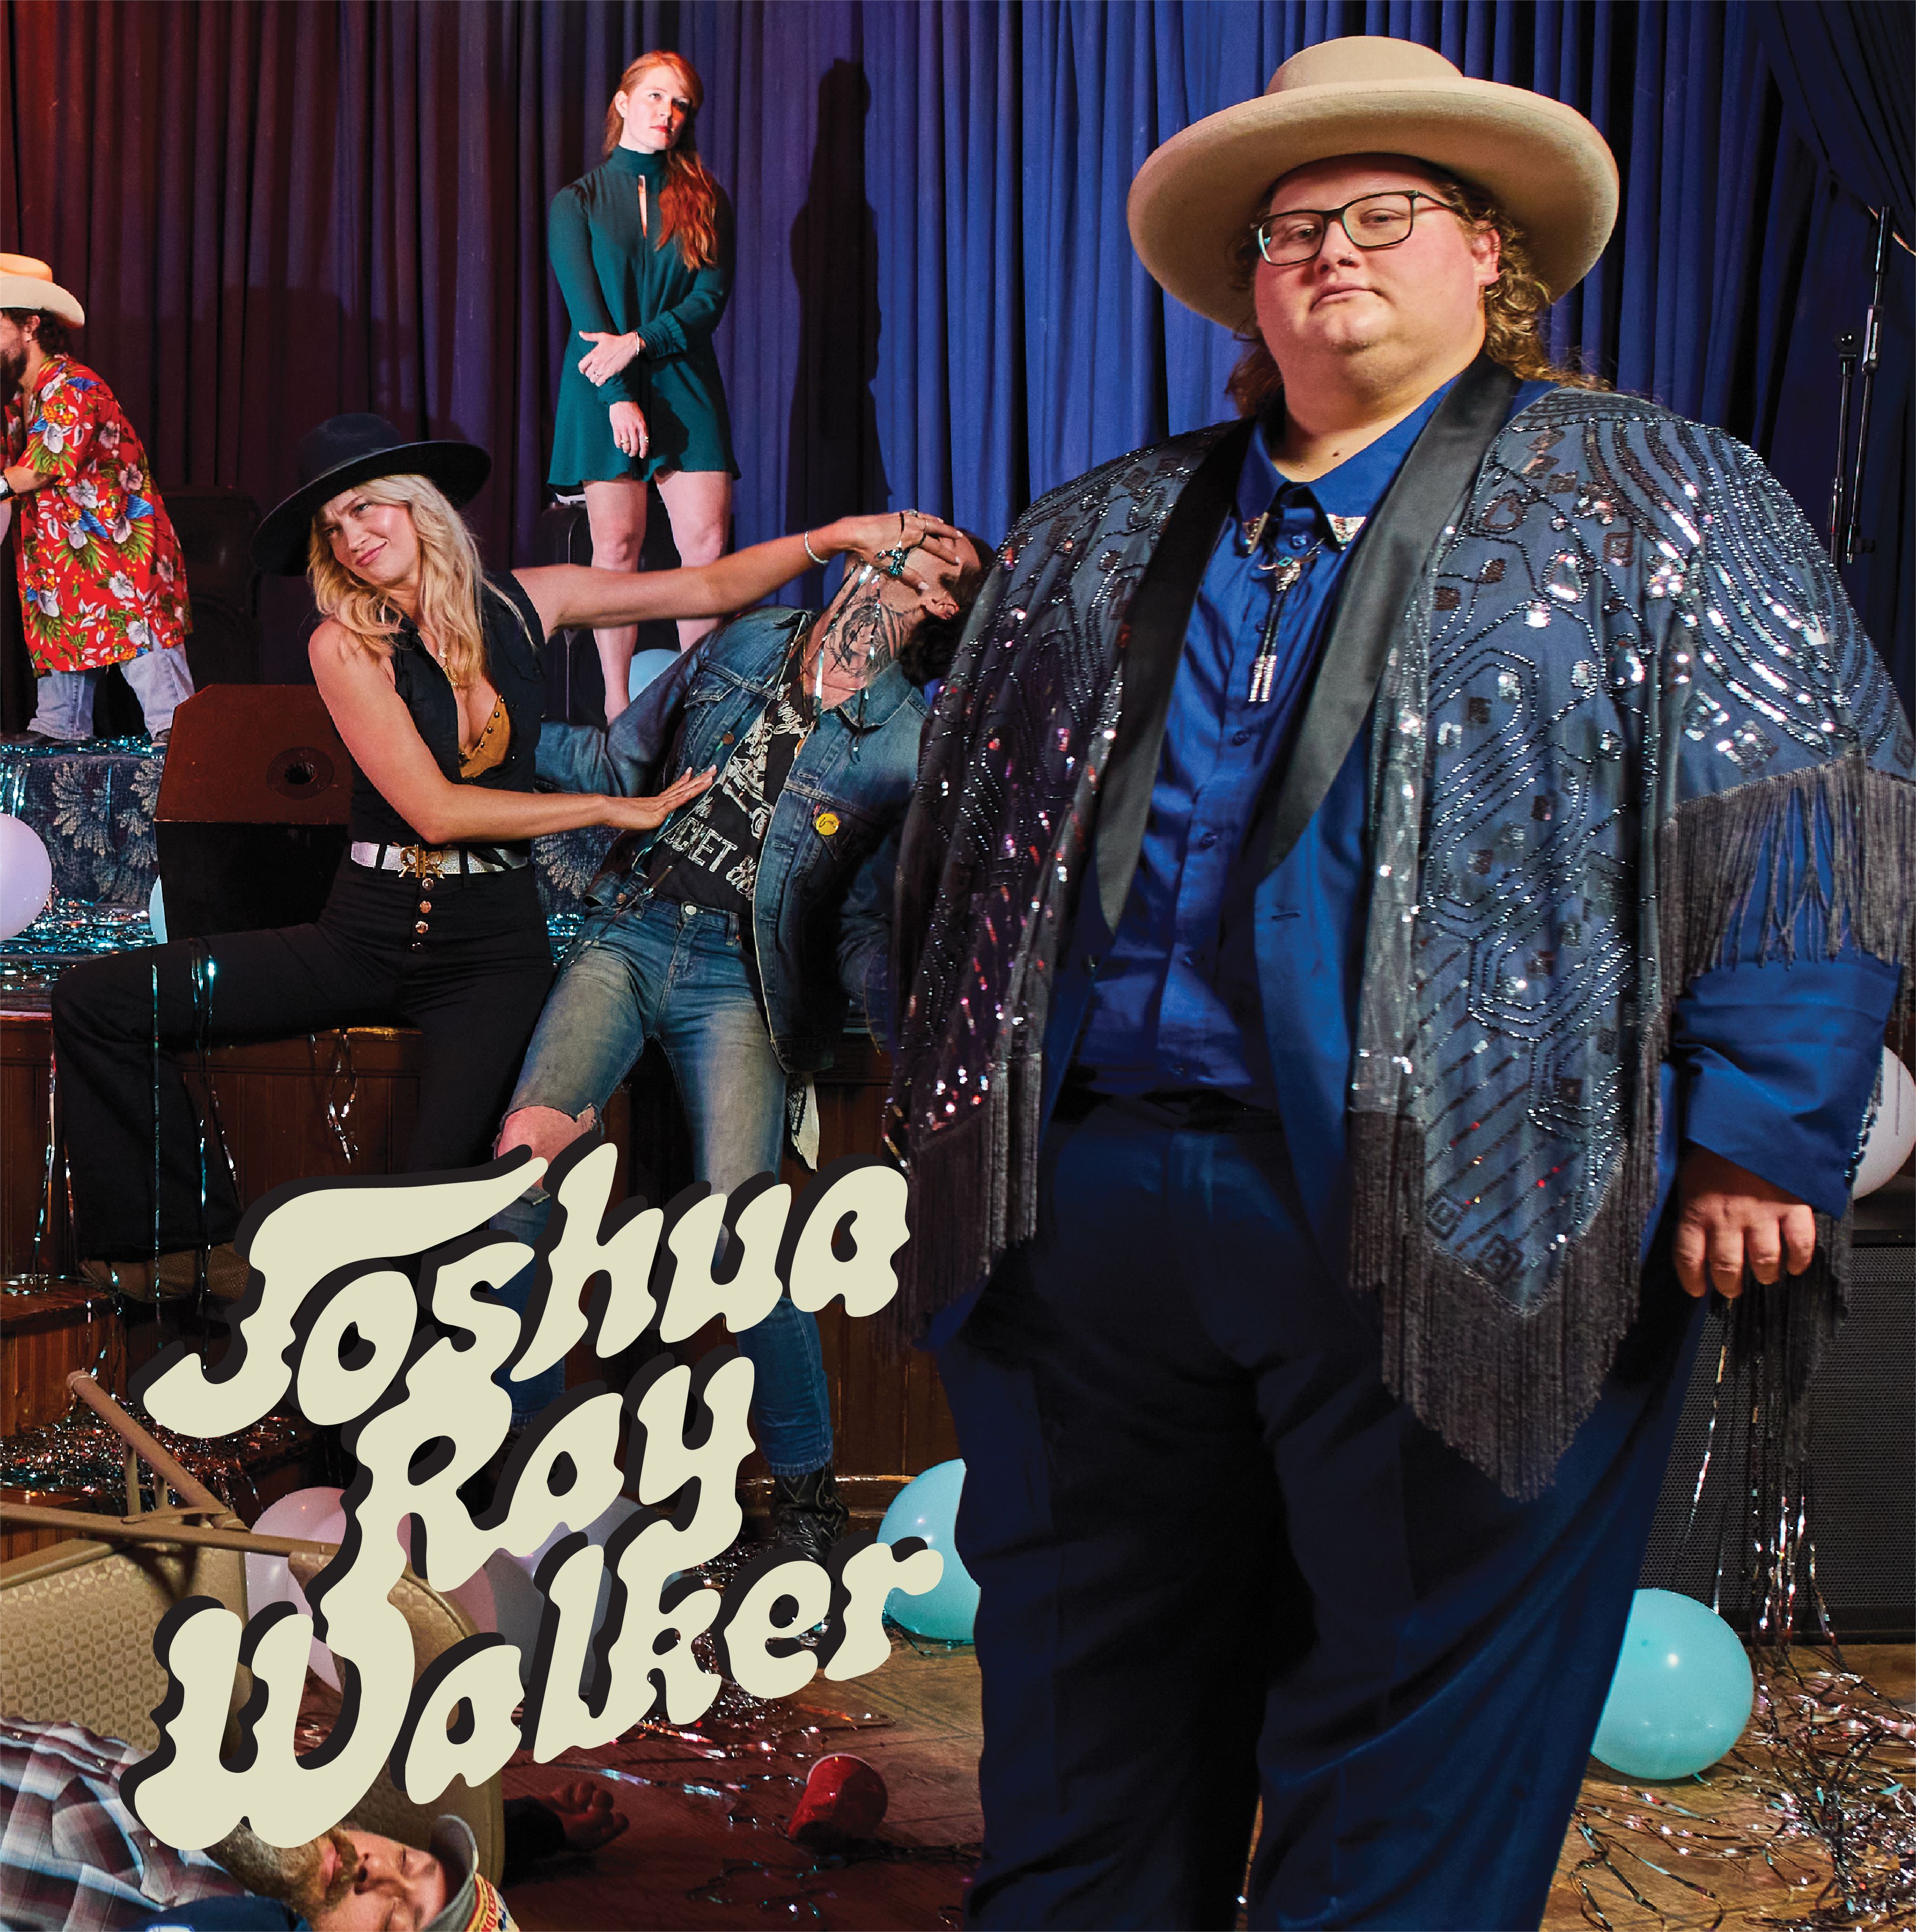 Album - Joshua Ray Walker - See You Next Time